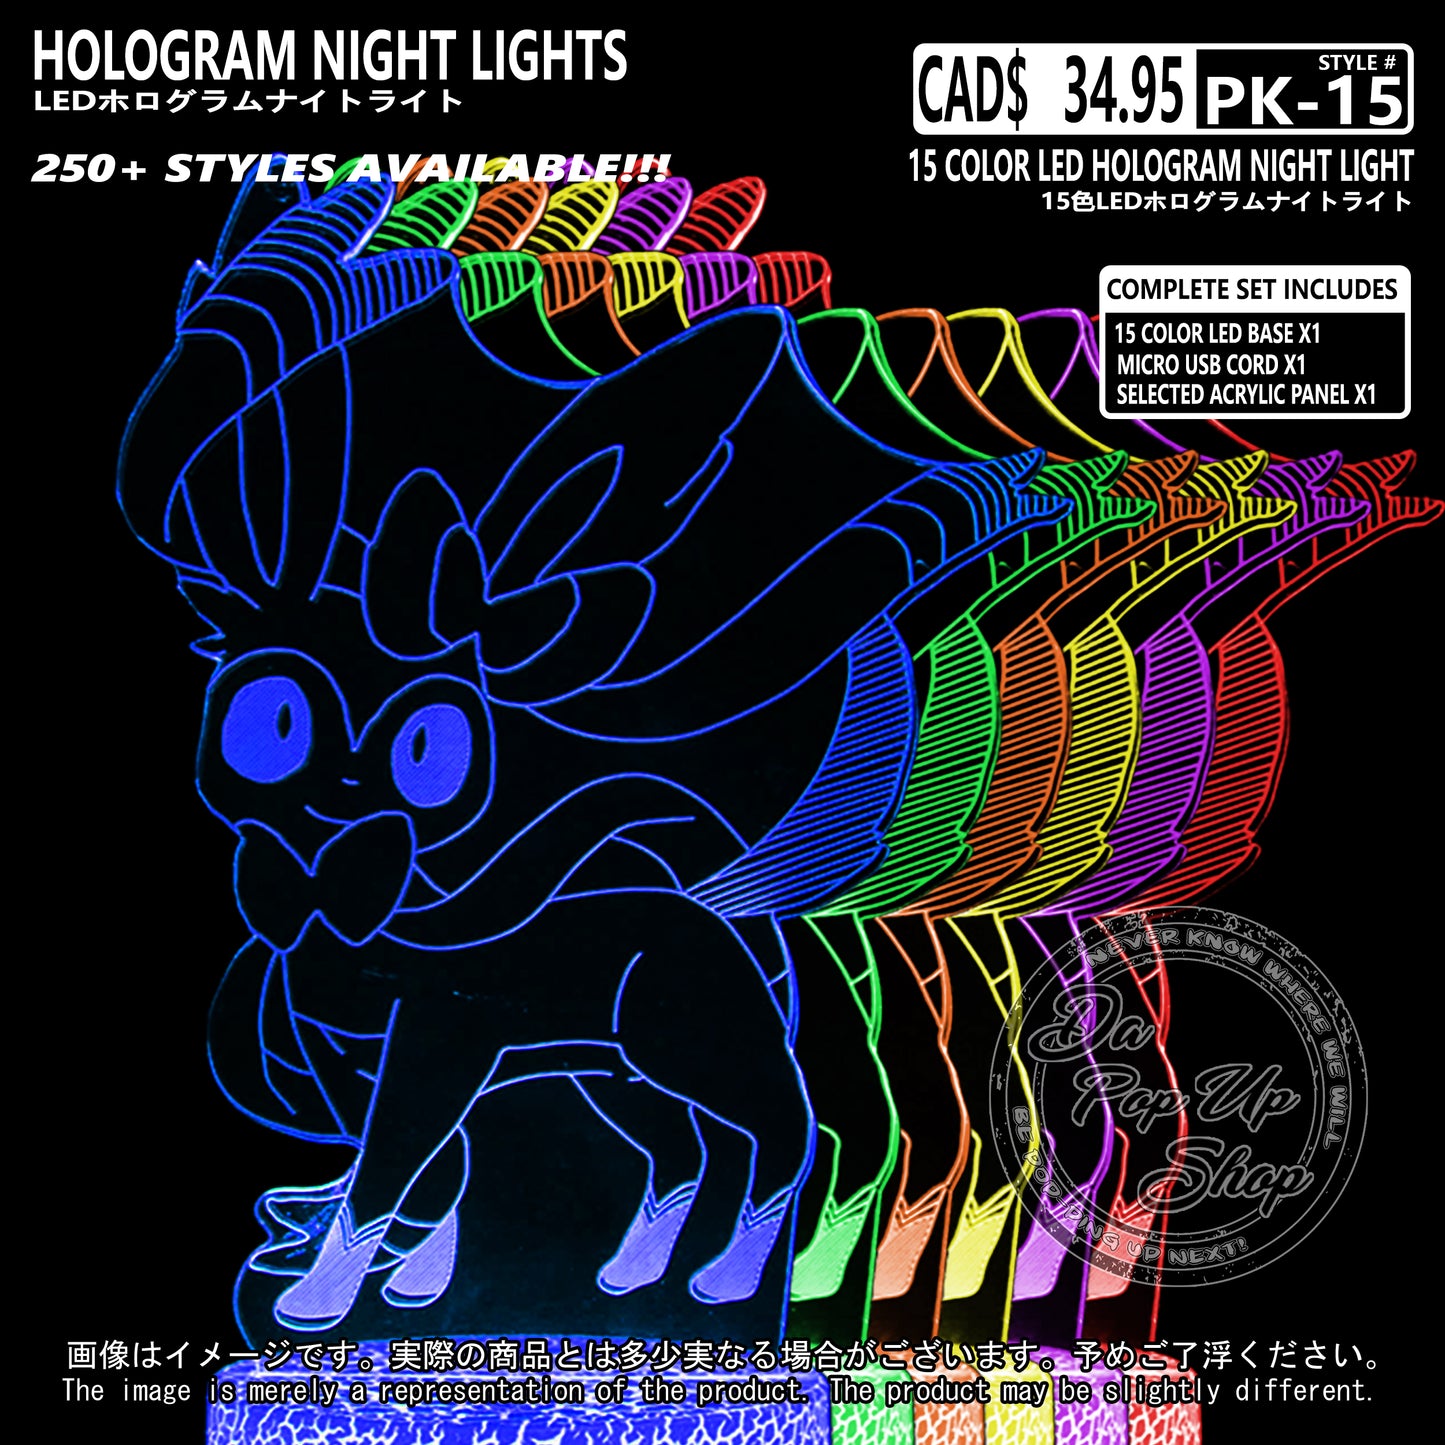 (PKM-15) SYLVEON Pokemon Hologram LED Night Light